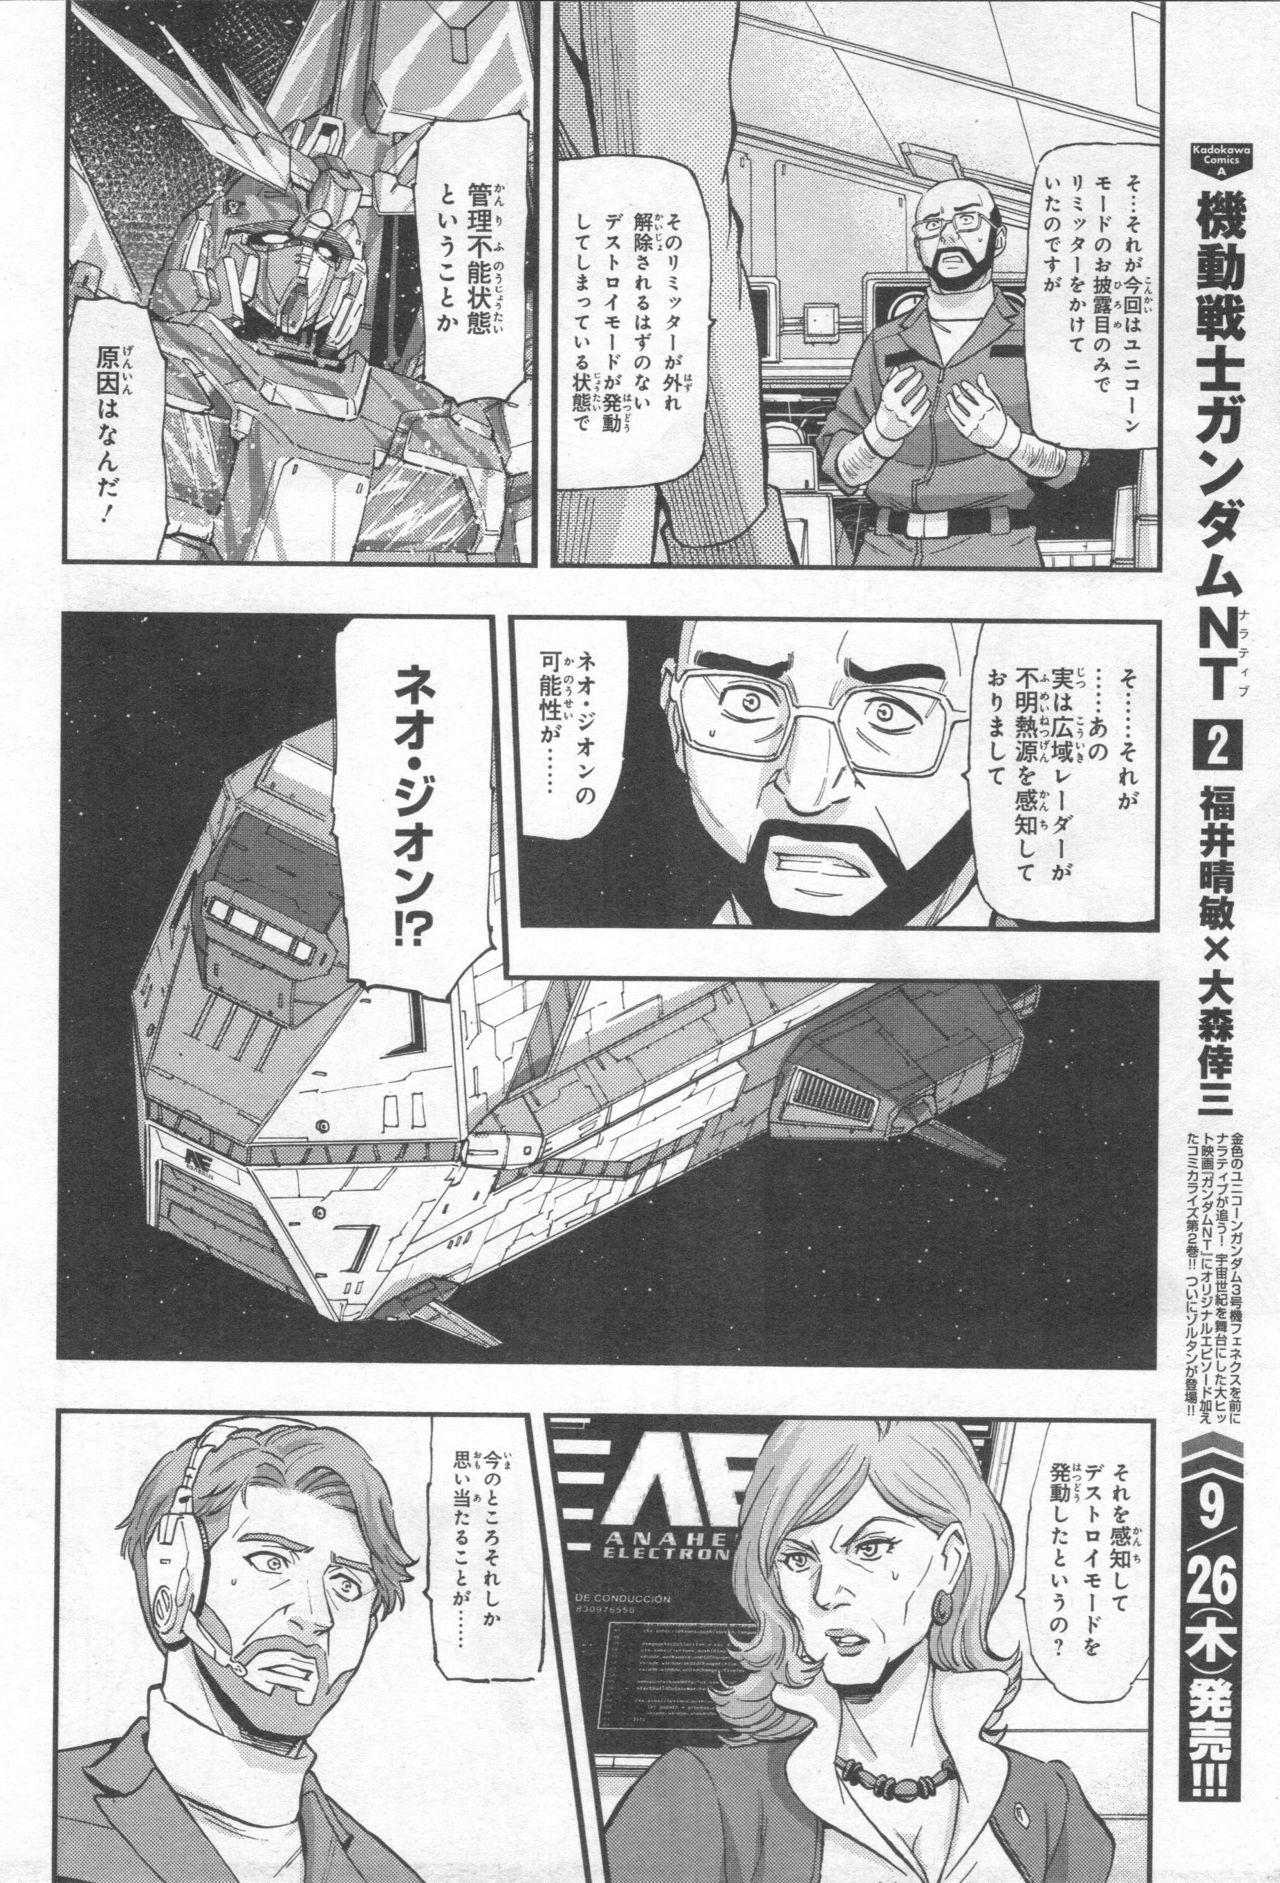 Gundam Ace - October 2019 248